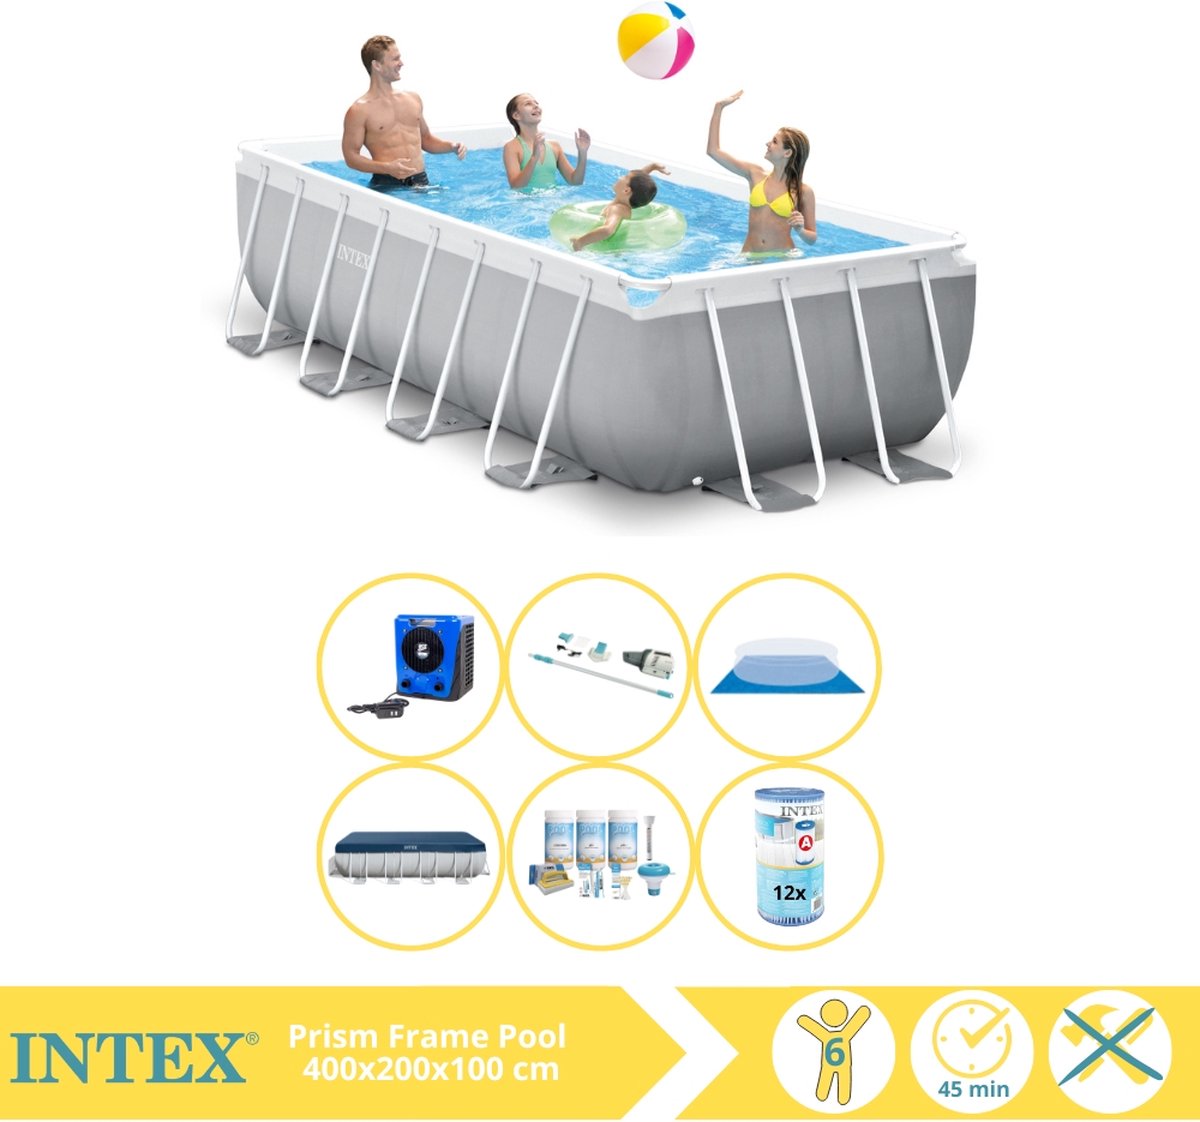 Intex Prism Frame Zwembad - Opzetzwembad - 400x200x100 cm - Inclusief Afdekzeil, Onderhoudspakket, Filter, Grondzeil, Stofzuiger en Warmtepomp HS